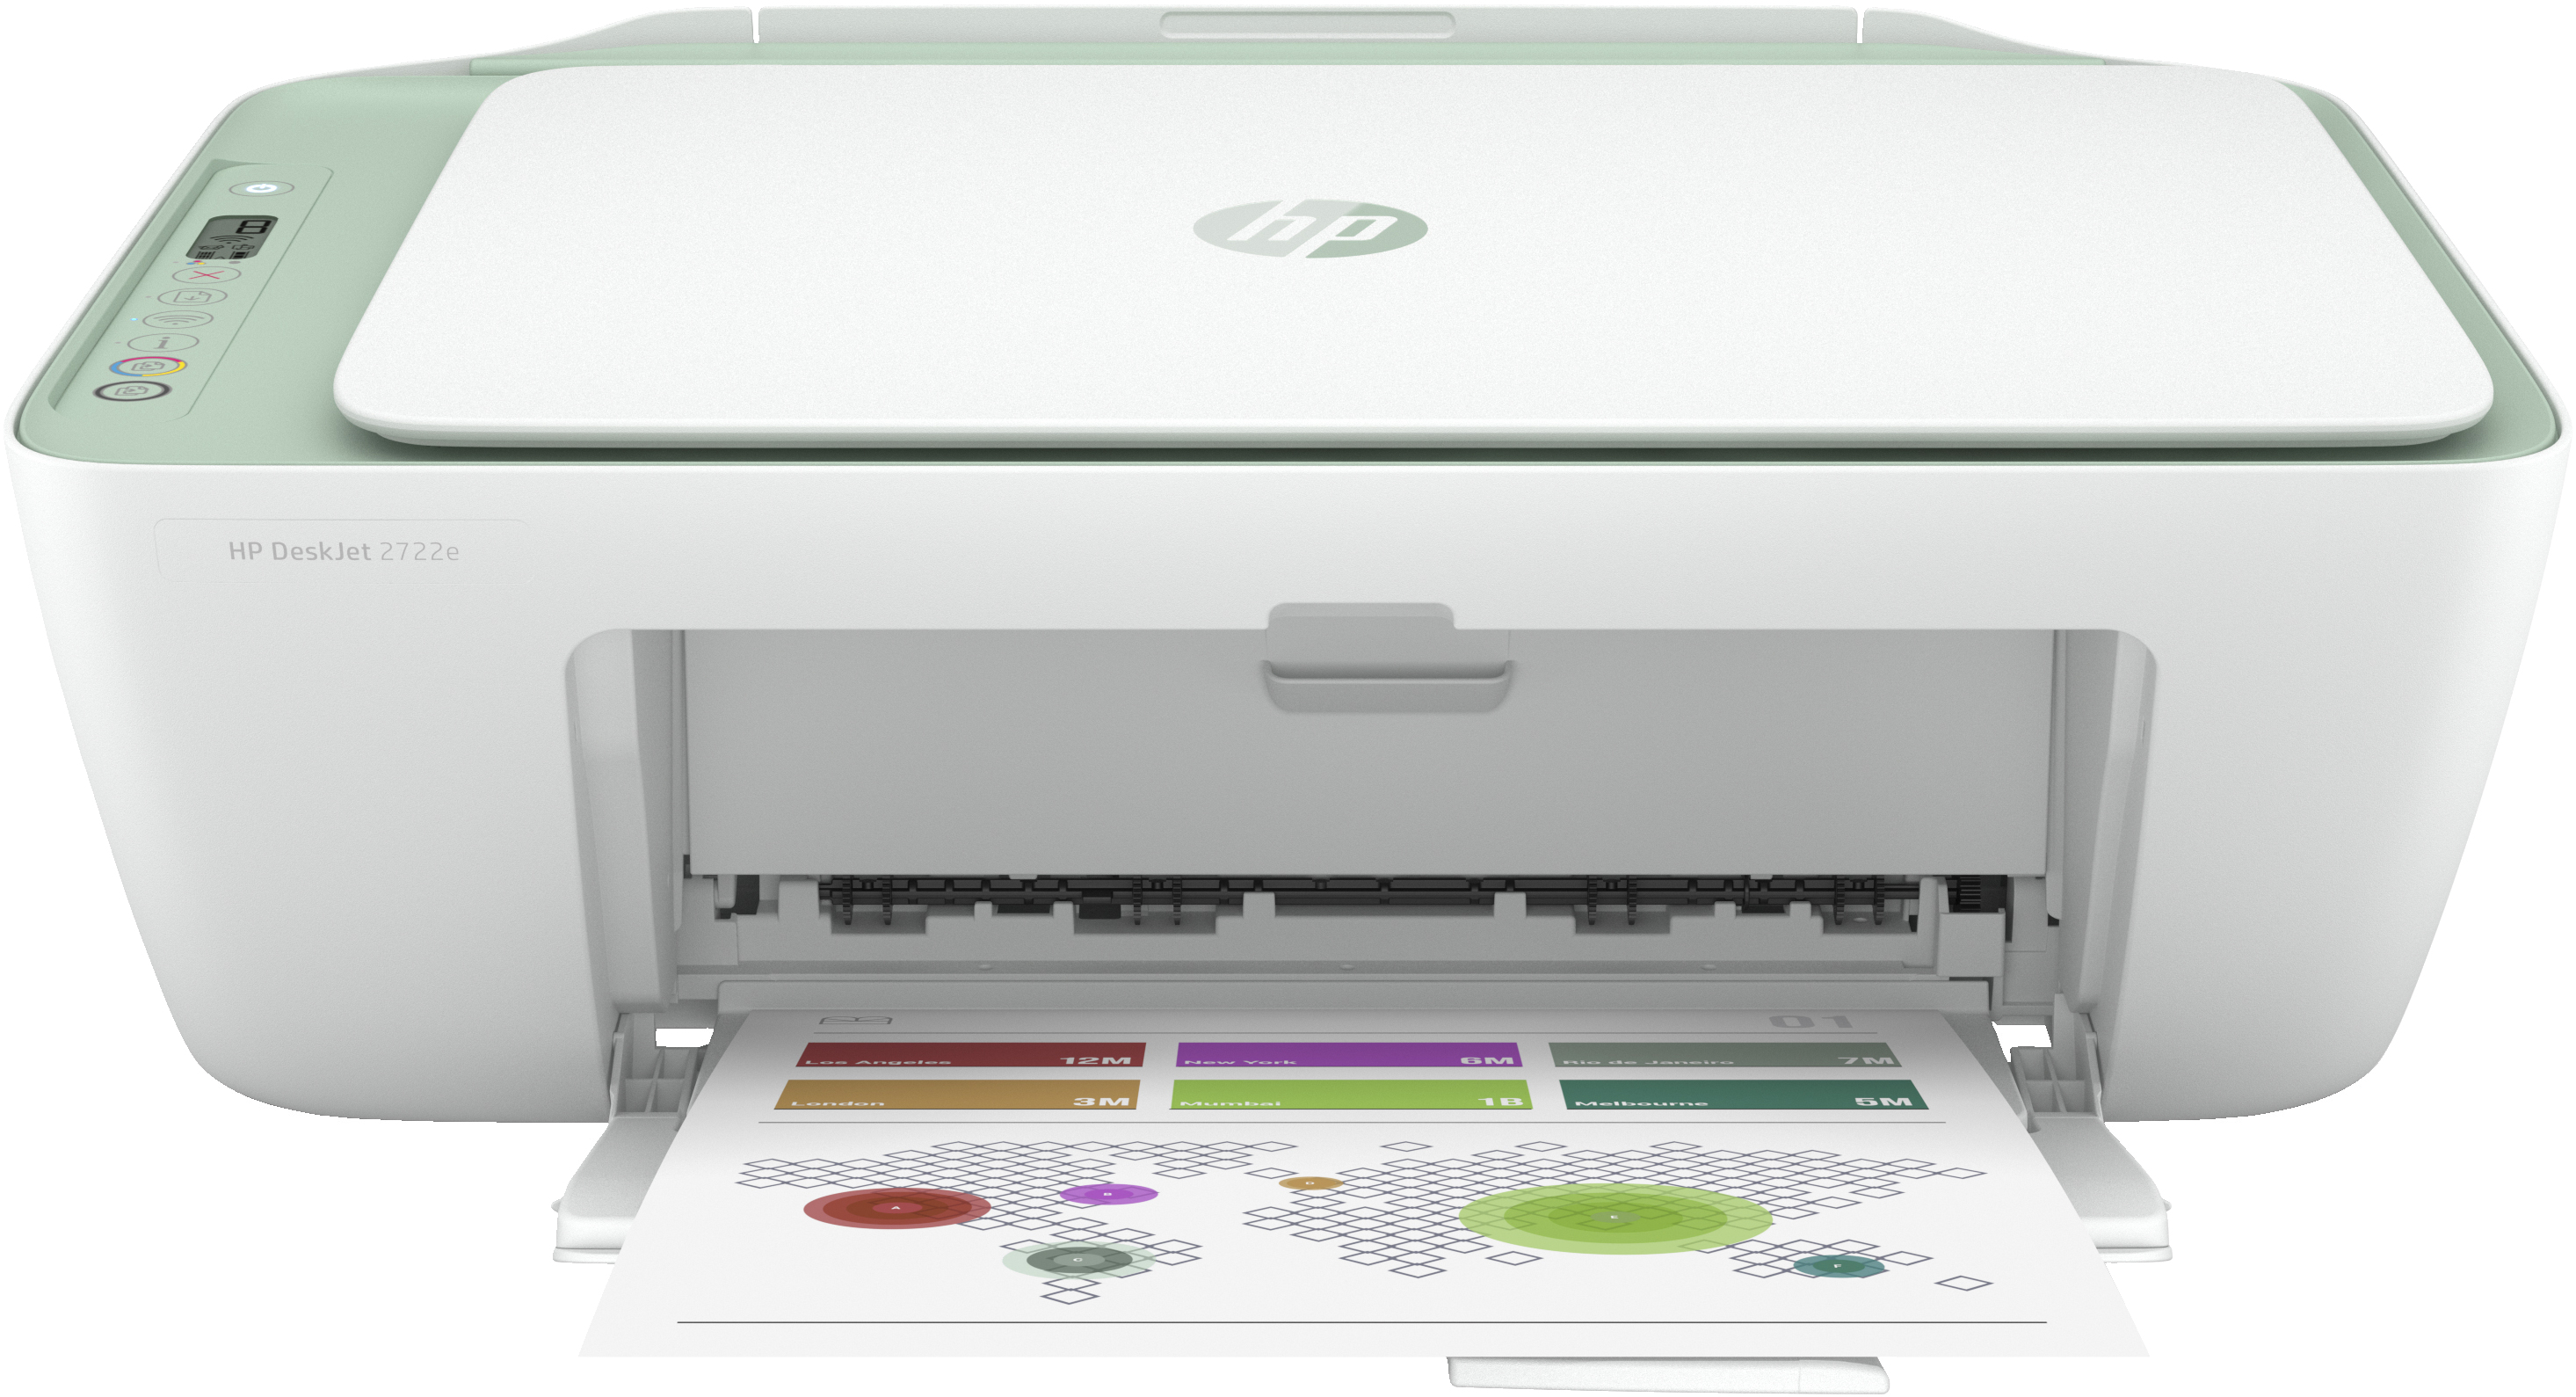 Image of HP DeskJet Stampante multifunzione HP 2722e, Colore, Stampante per Casa, Stampa, copia, scansione, wireless; HP+; idonea a HP Instant Ink; stampa da smartphone o tablet